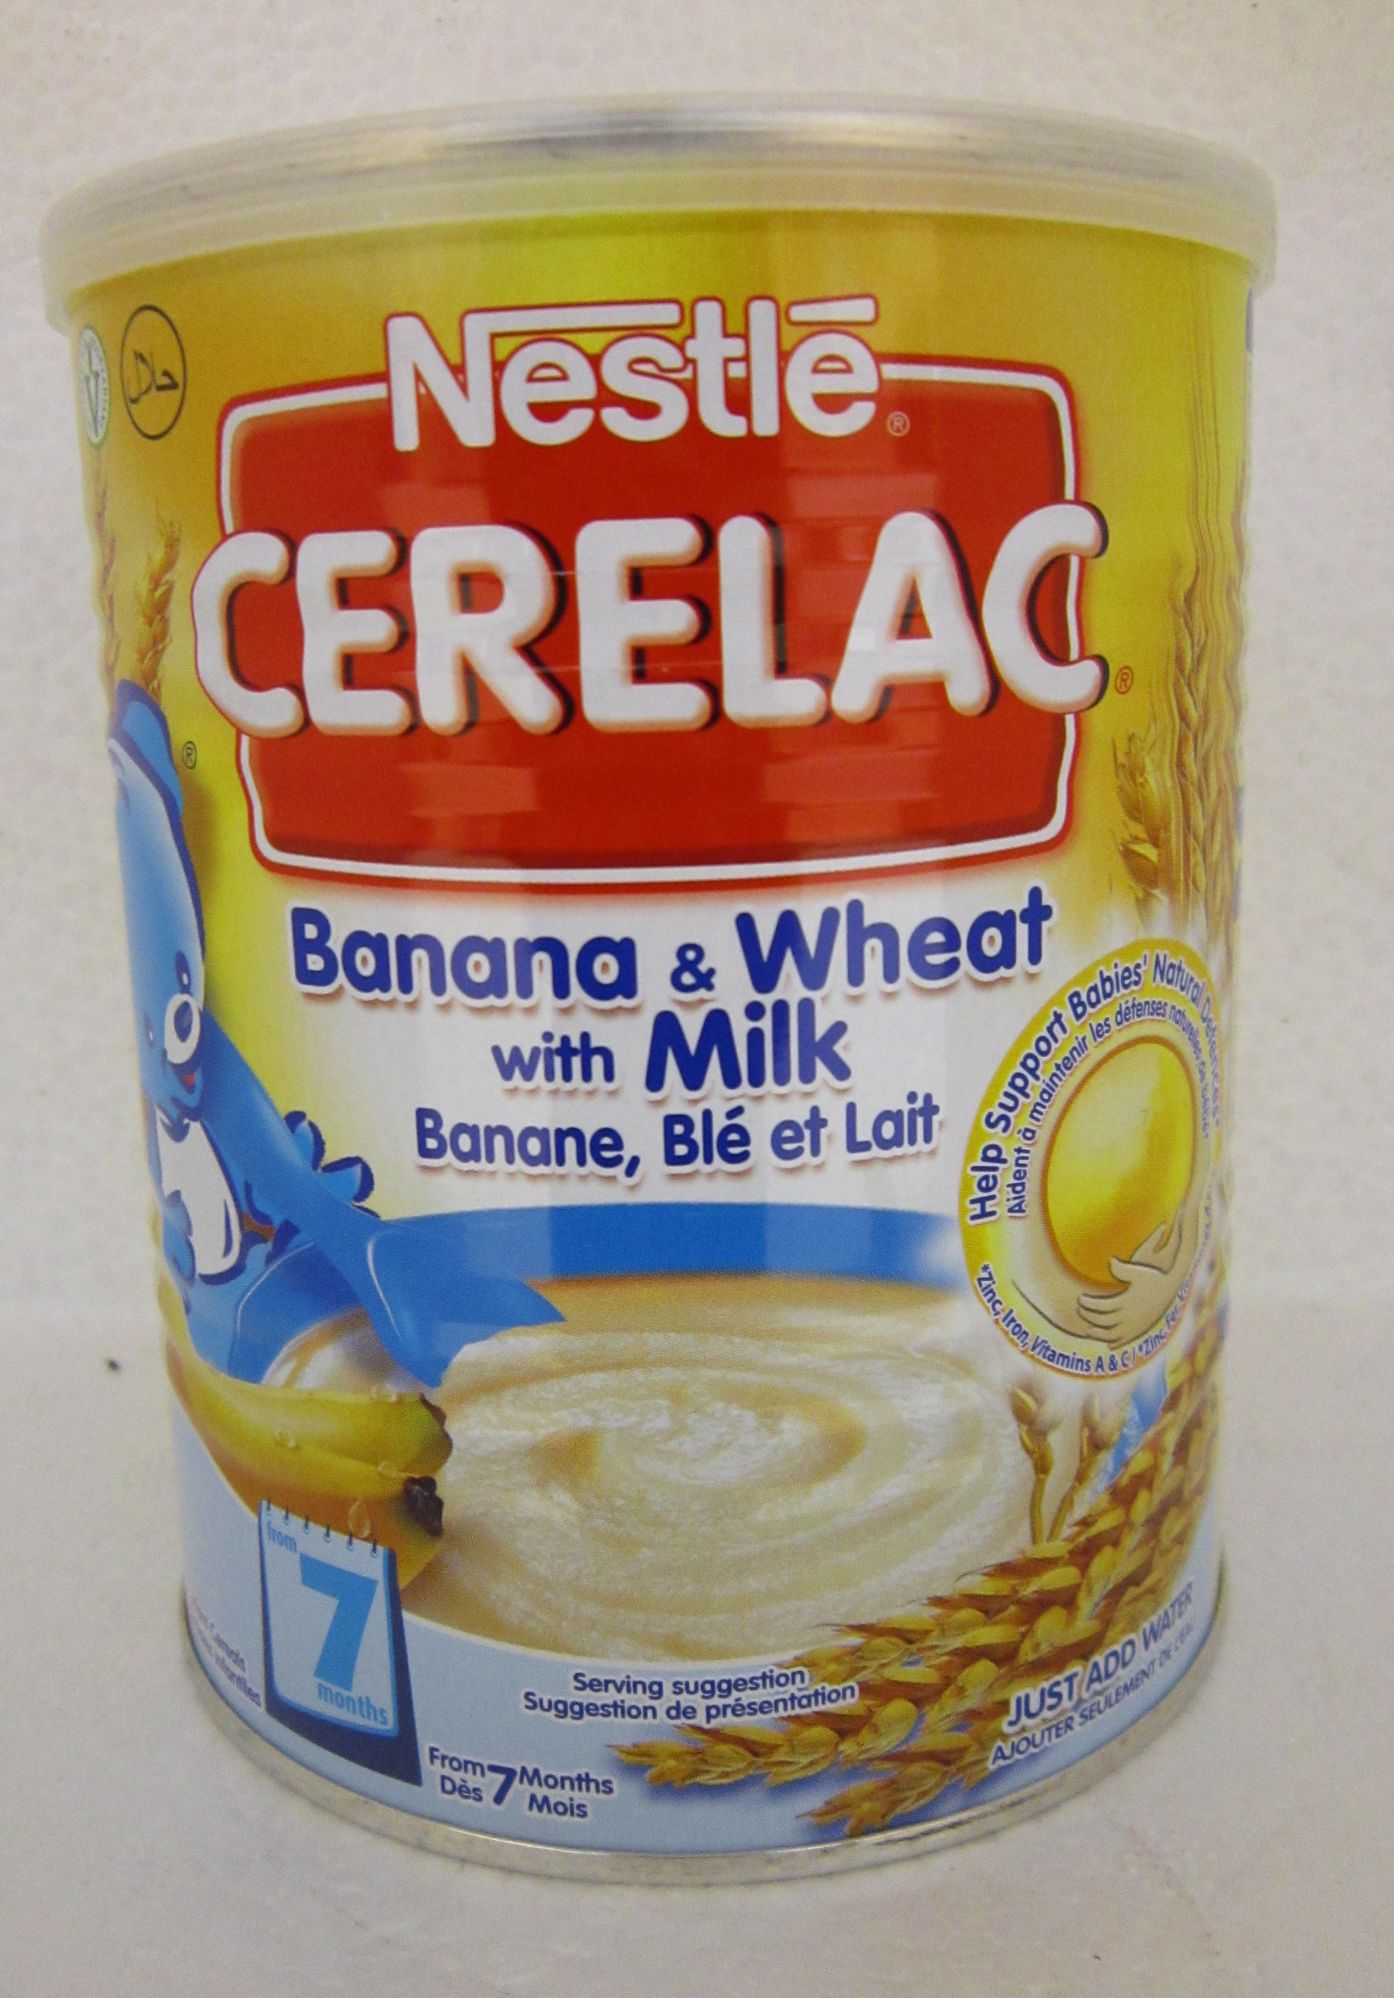 Nestle Cerelac Image